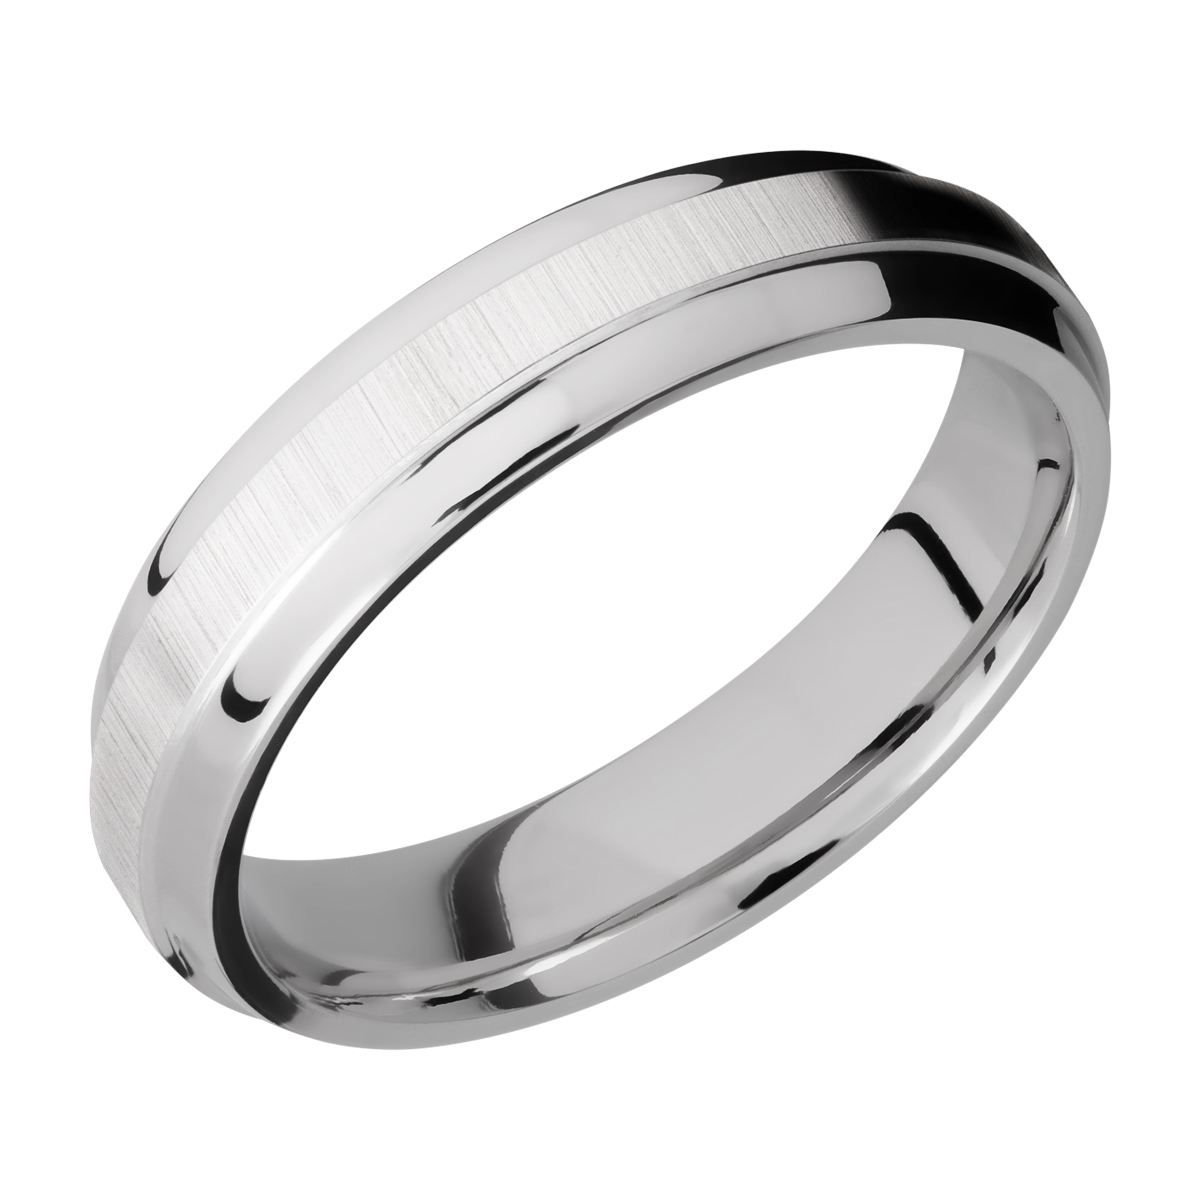 Lashbrook CC5B(S) Cobalt Chrome Wedding Ring or Band